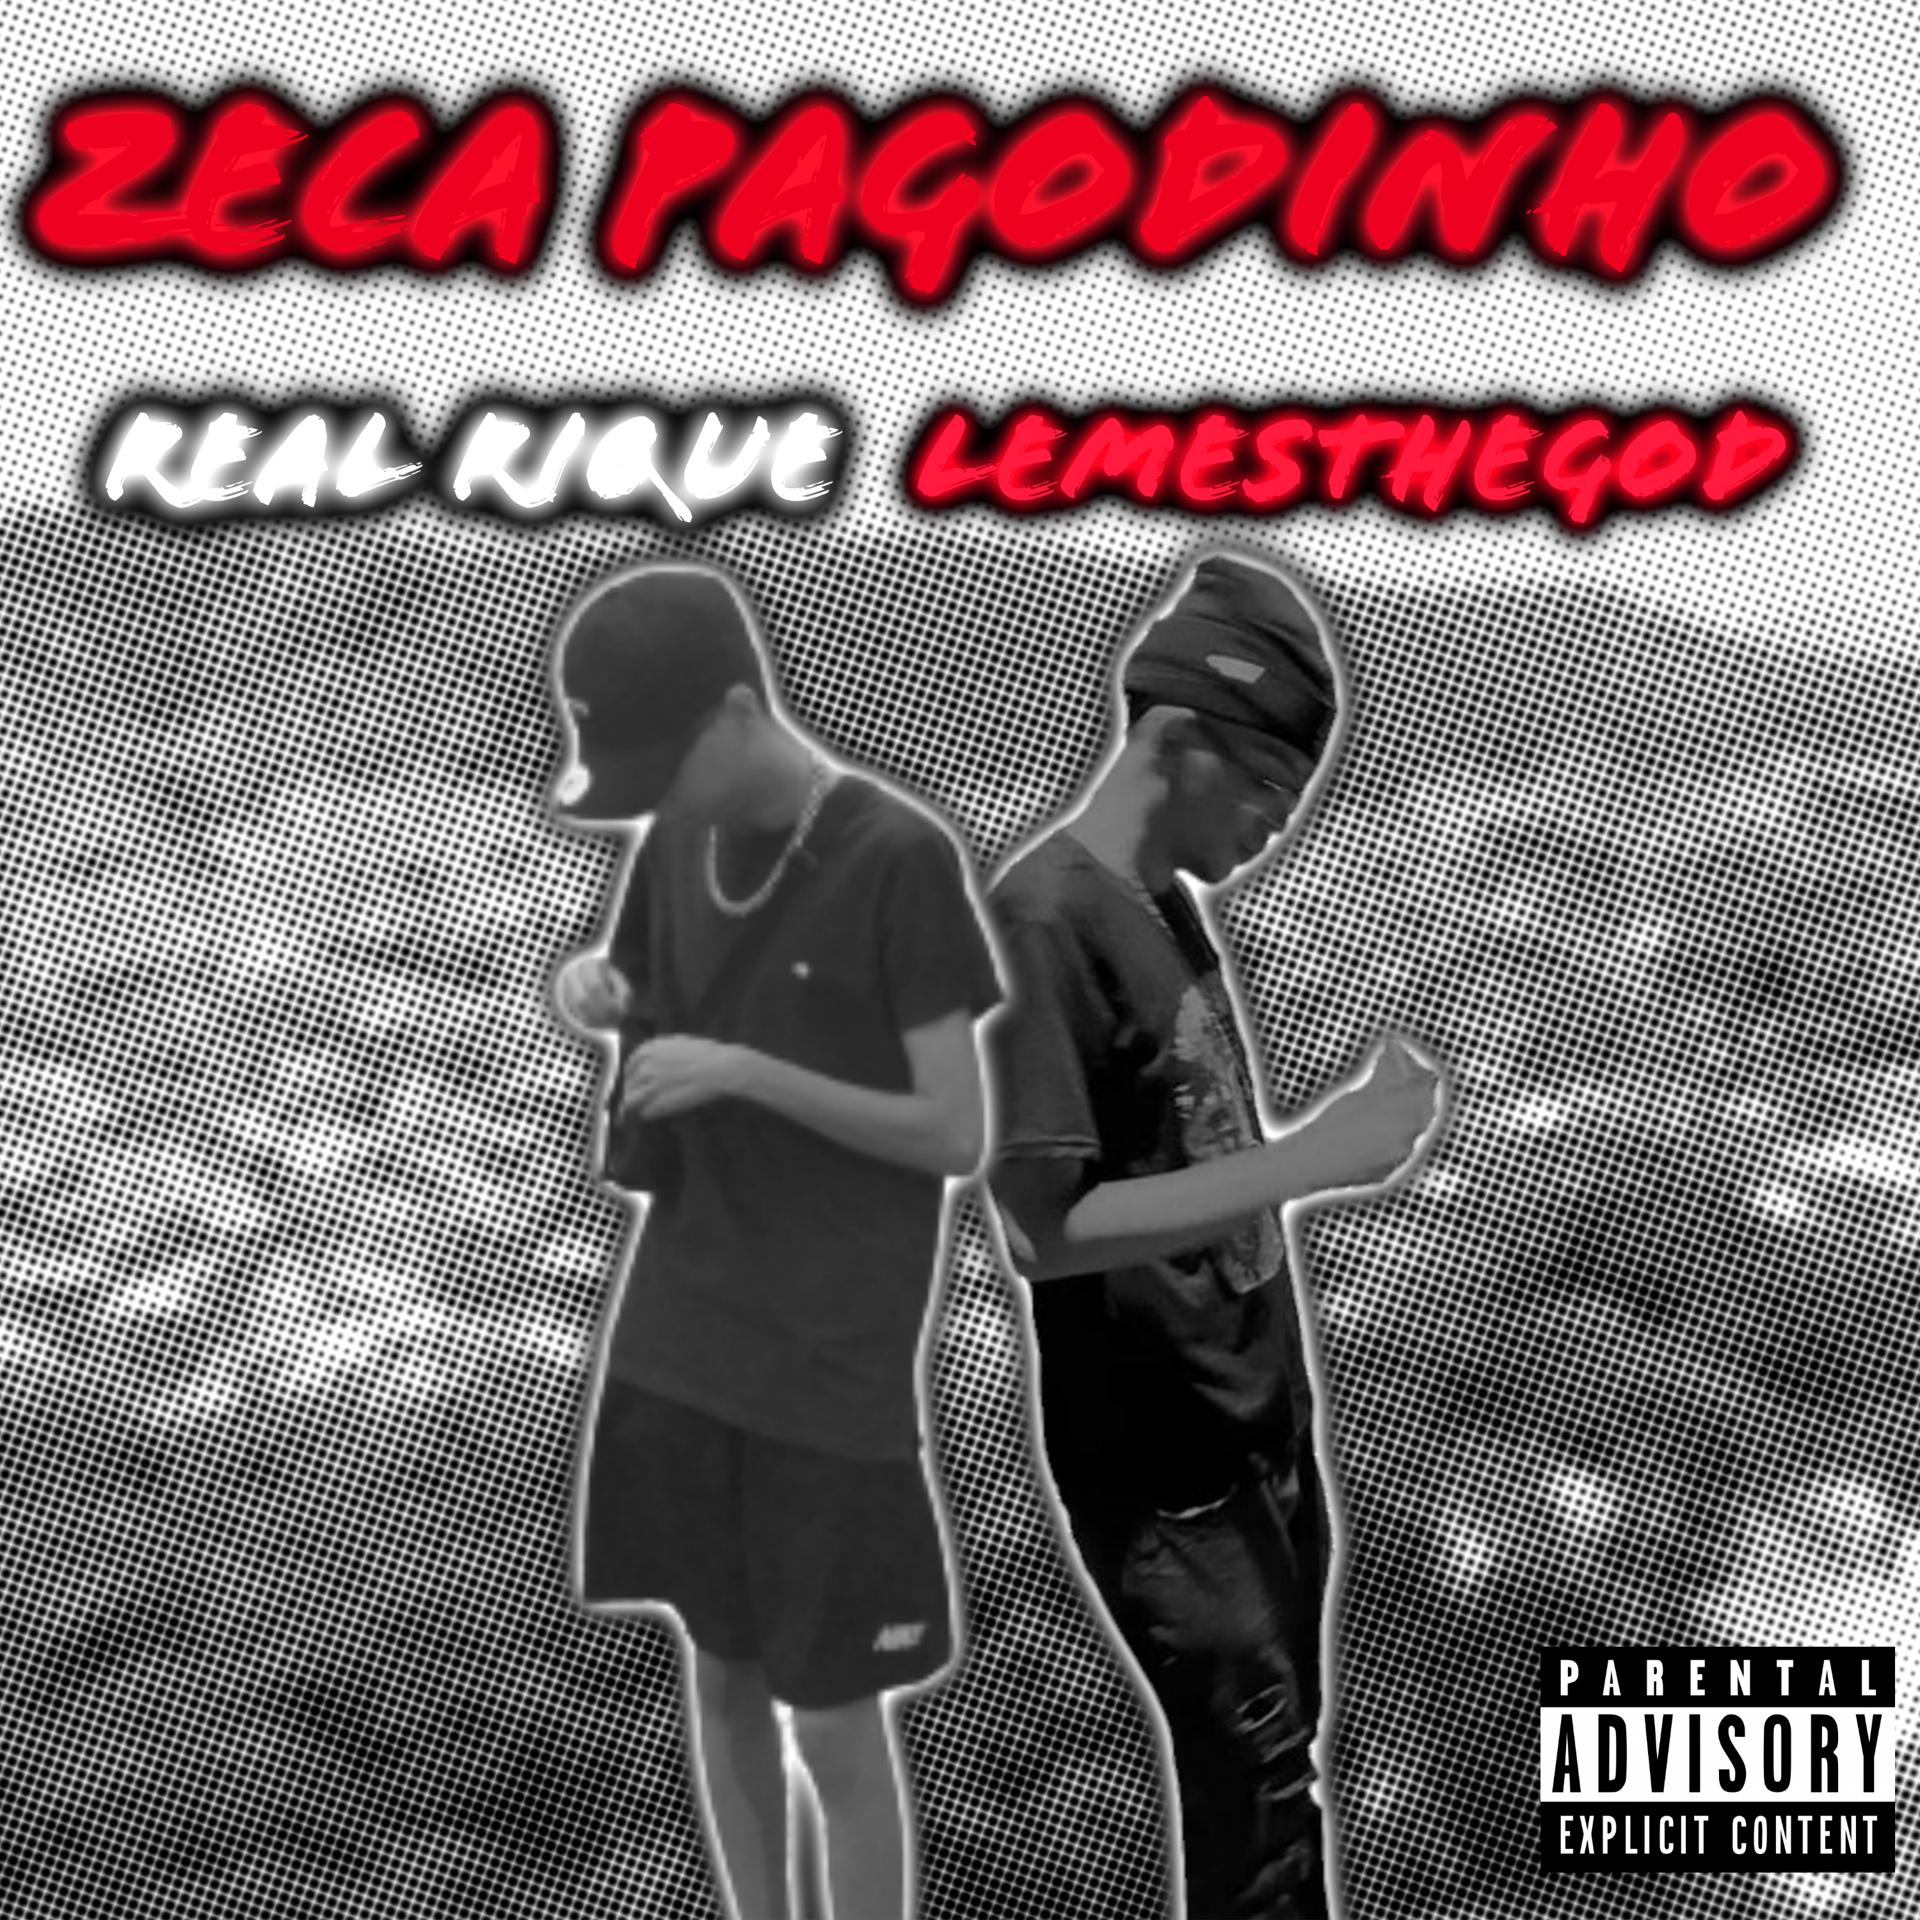 Постер альбома Zeca Pagodinho